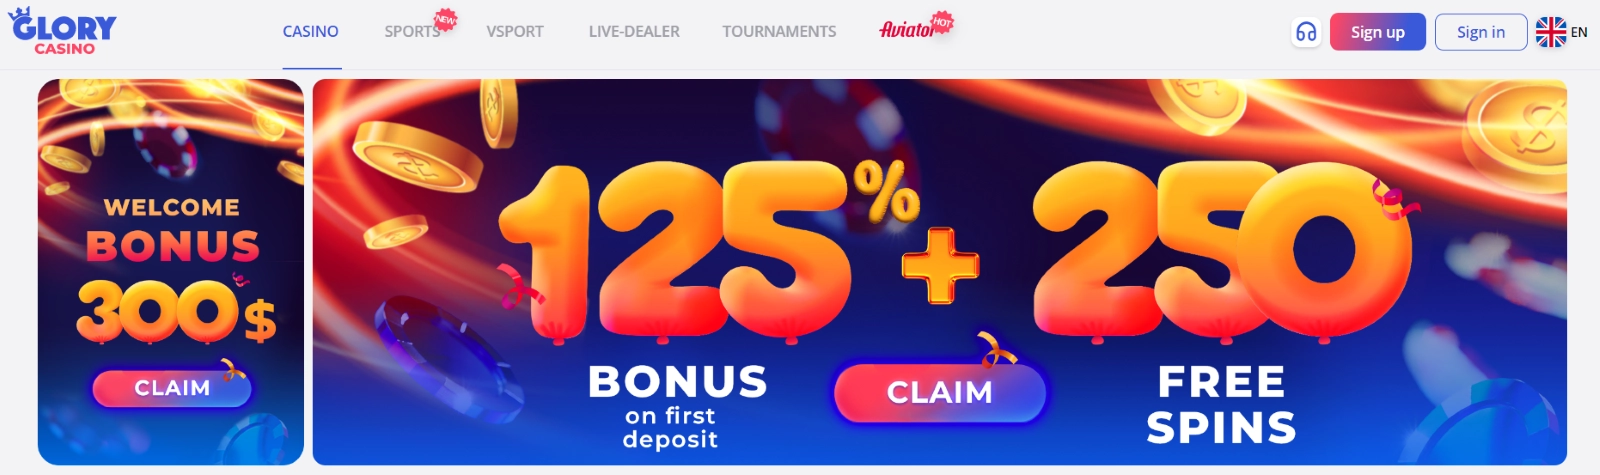 glory casino bonus offers